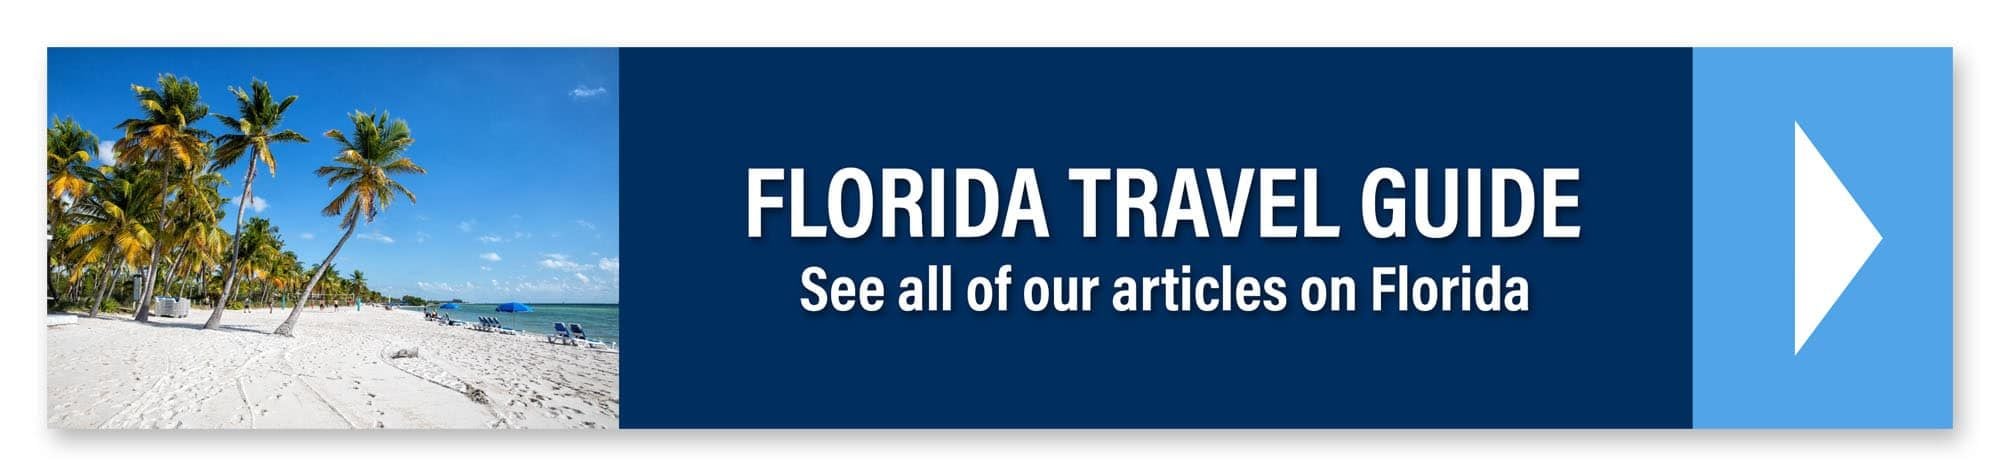 Florida Travel Guide